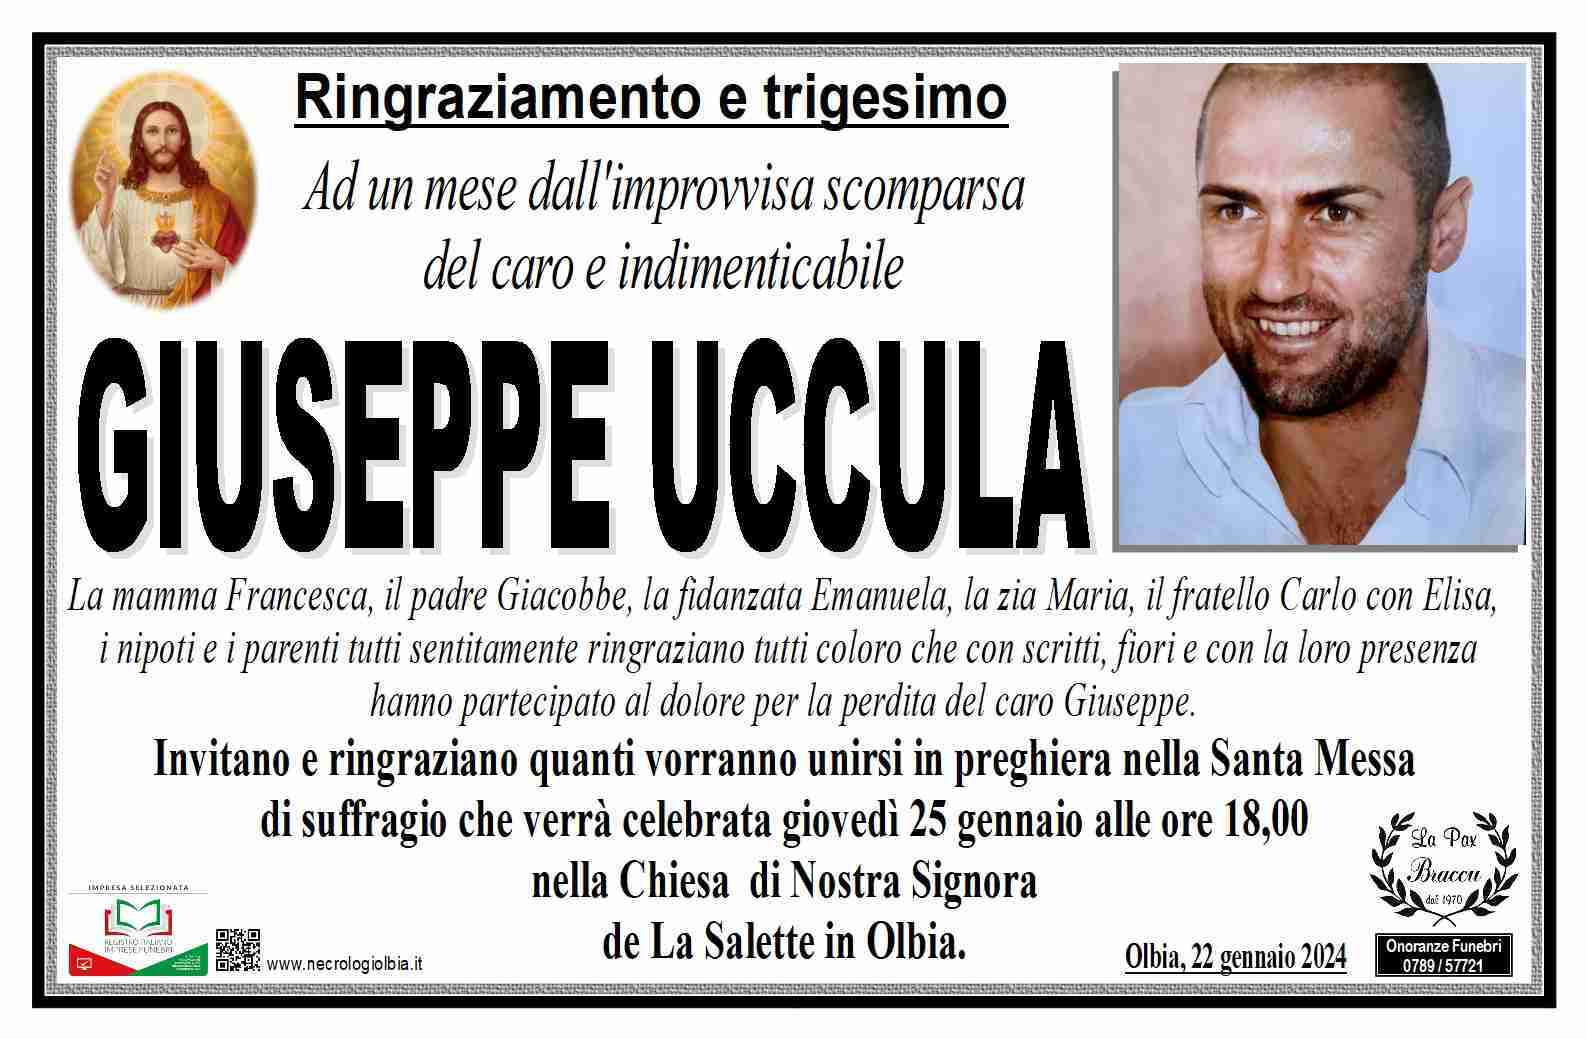 Giuseppe Uccula